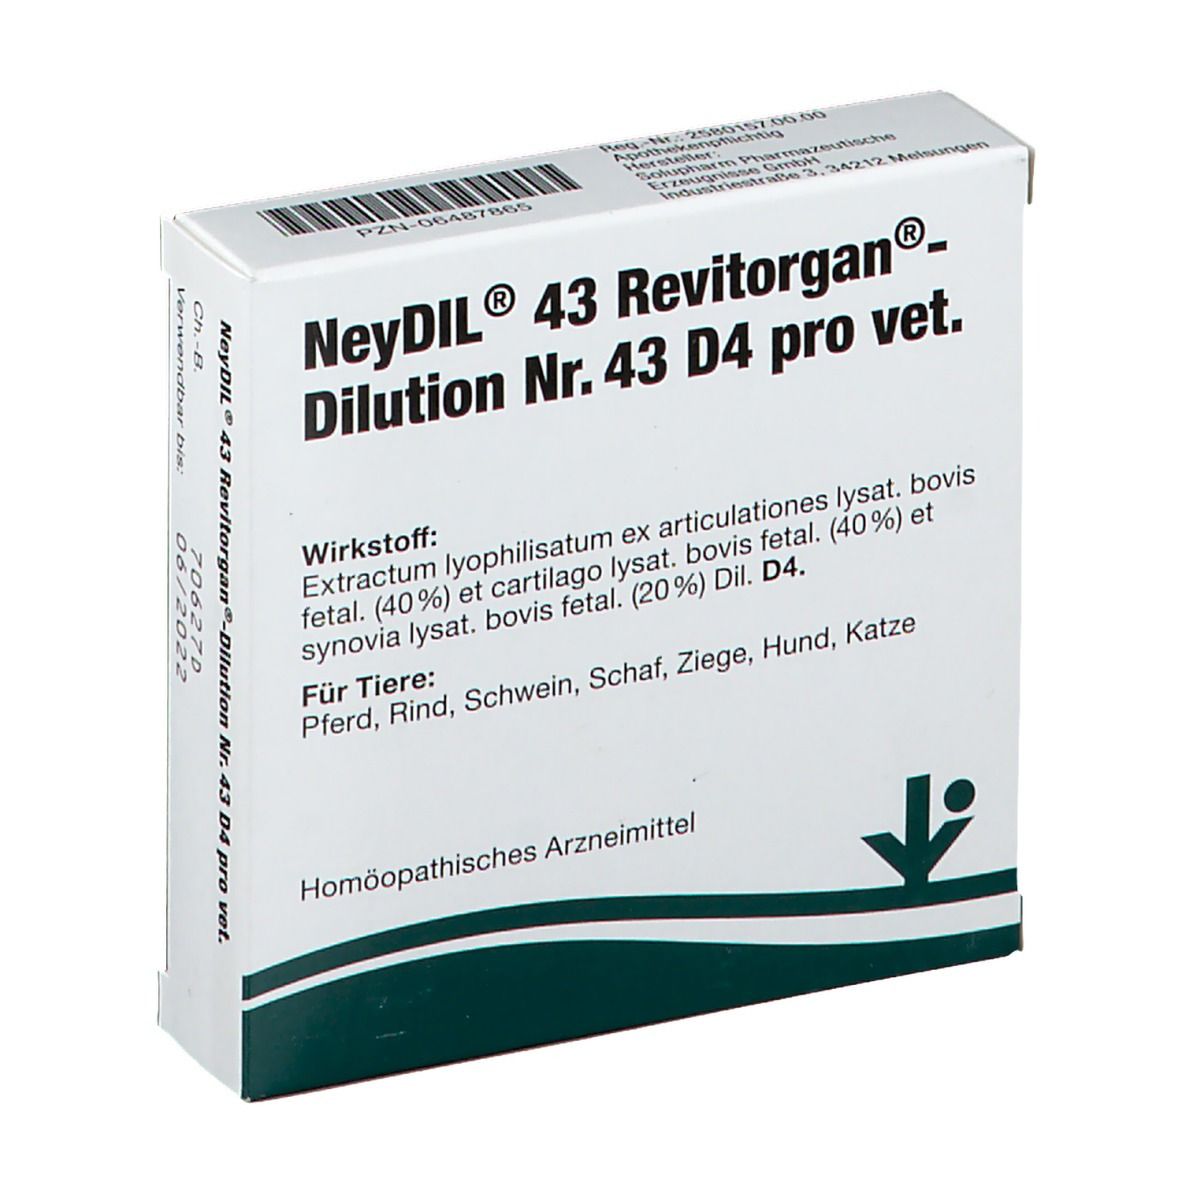 NeyDIL® 43 Revitorgan®-Dilution Nr. 43 D4 pro vet.